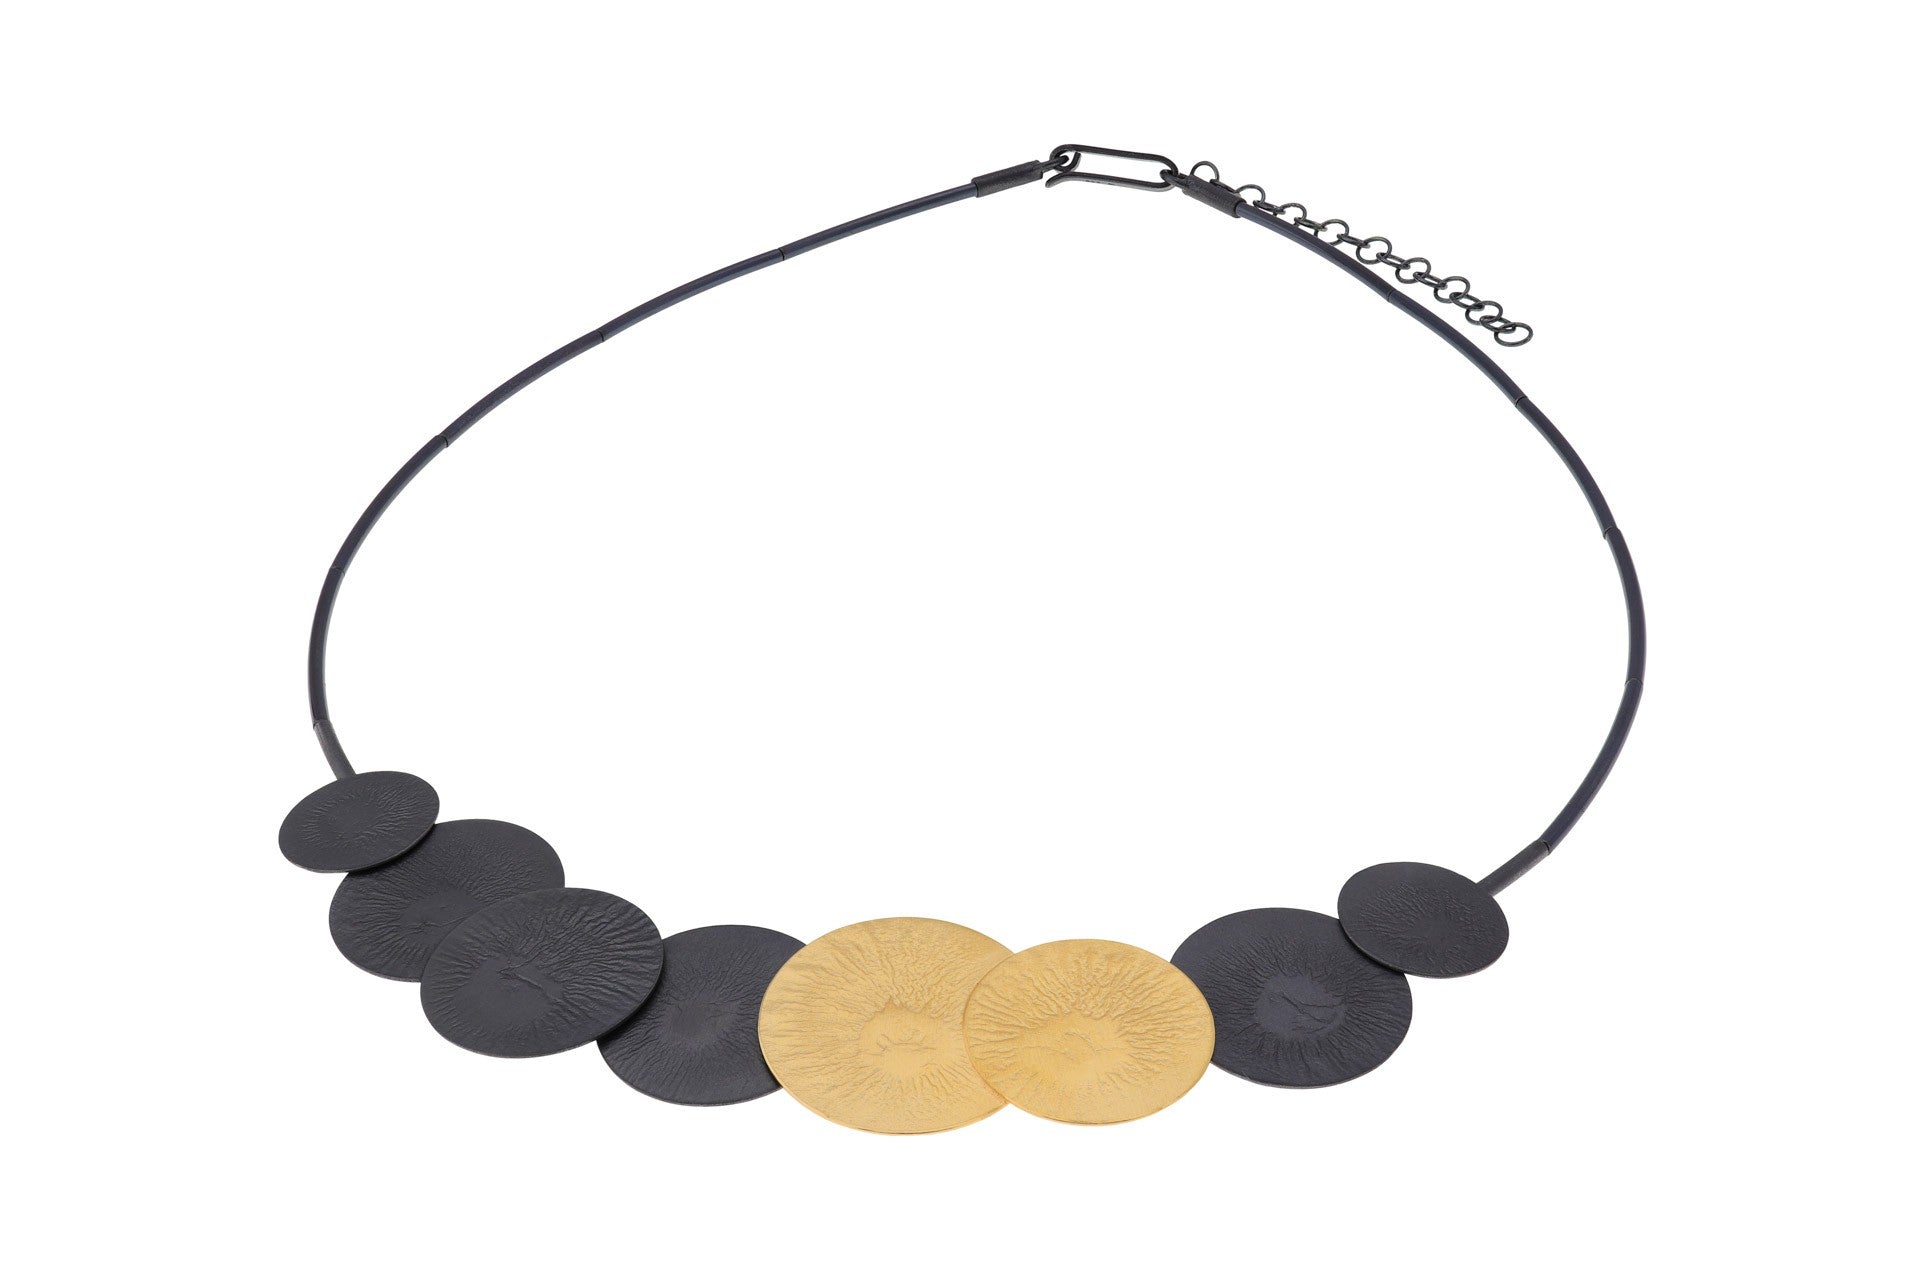 Black & Gold Necklace - The Nancy Smillie Shop - Art, Jewellery & Designer Gifts Glasgow